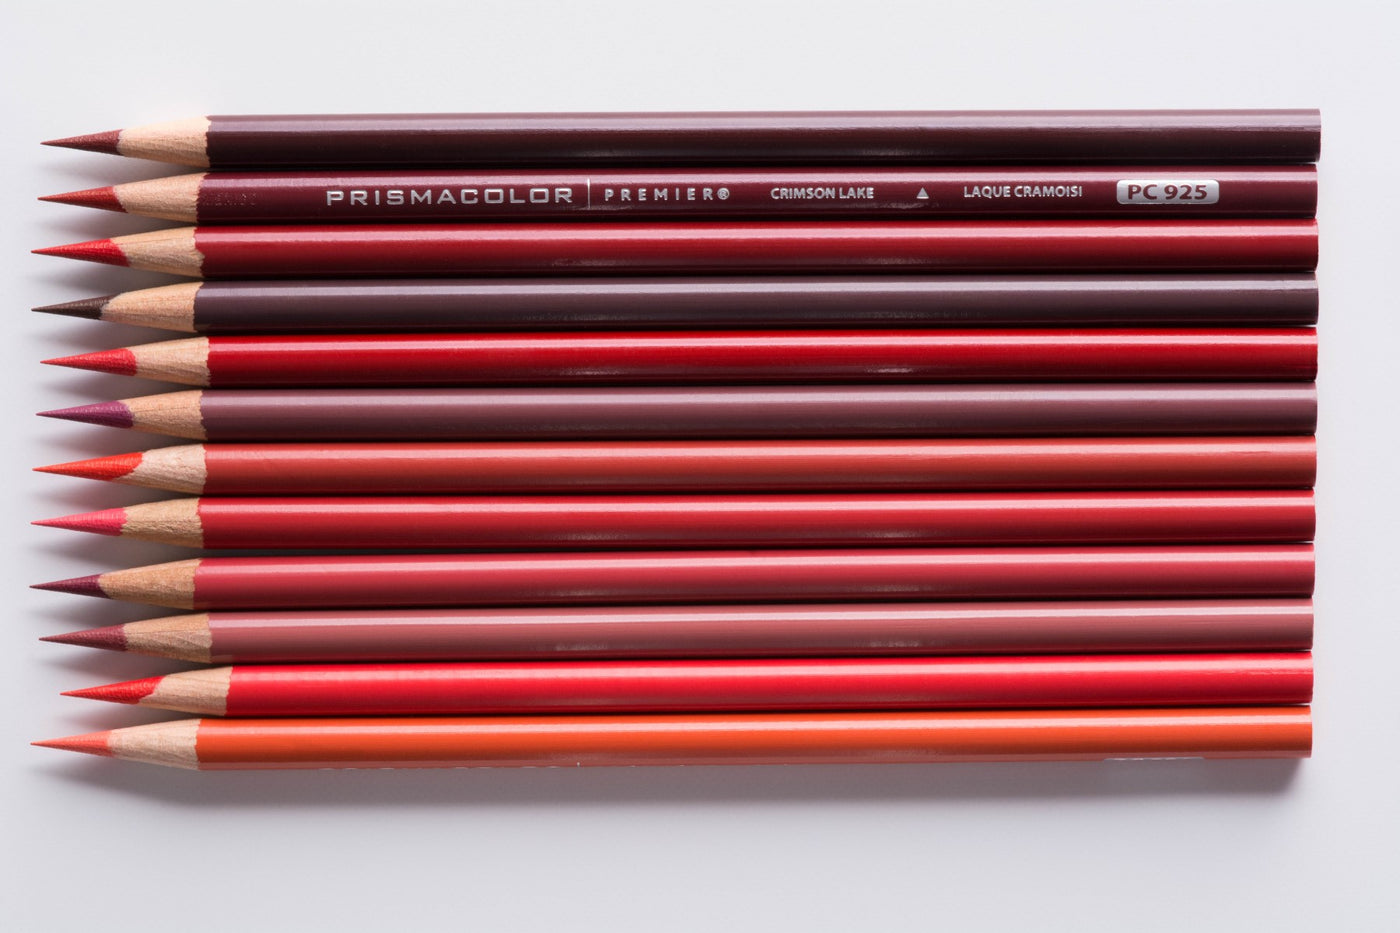 Prismacolor Premier Soft Core Colored Pencil, Crimson Red 924